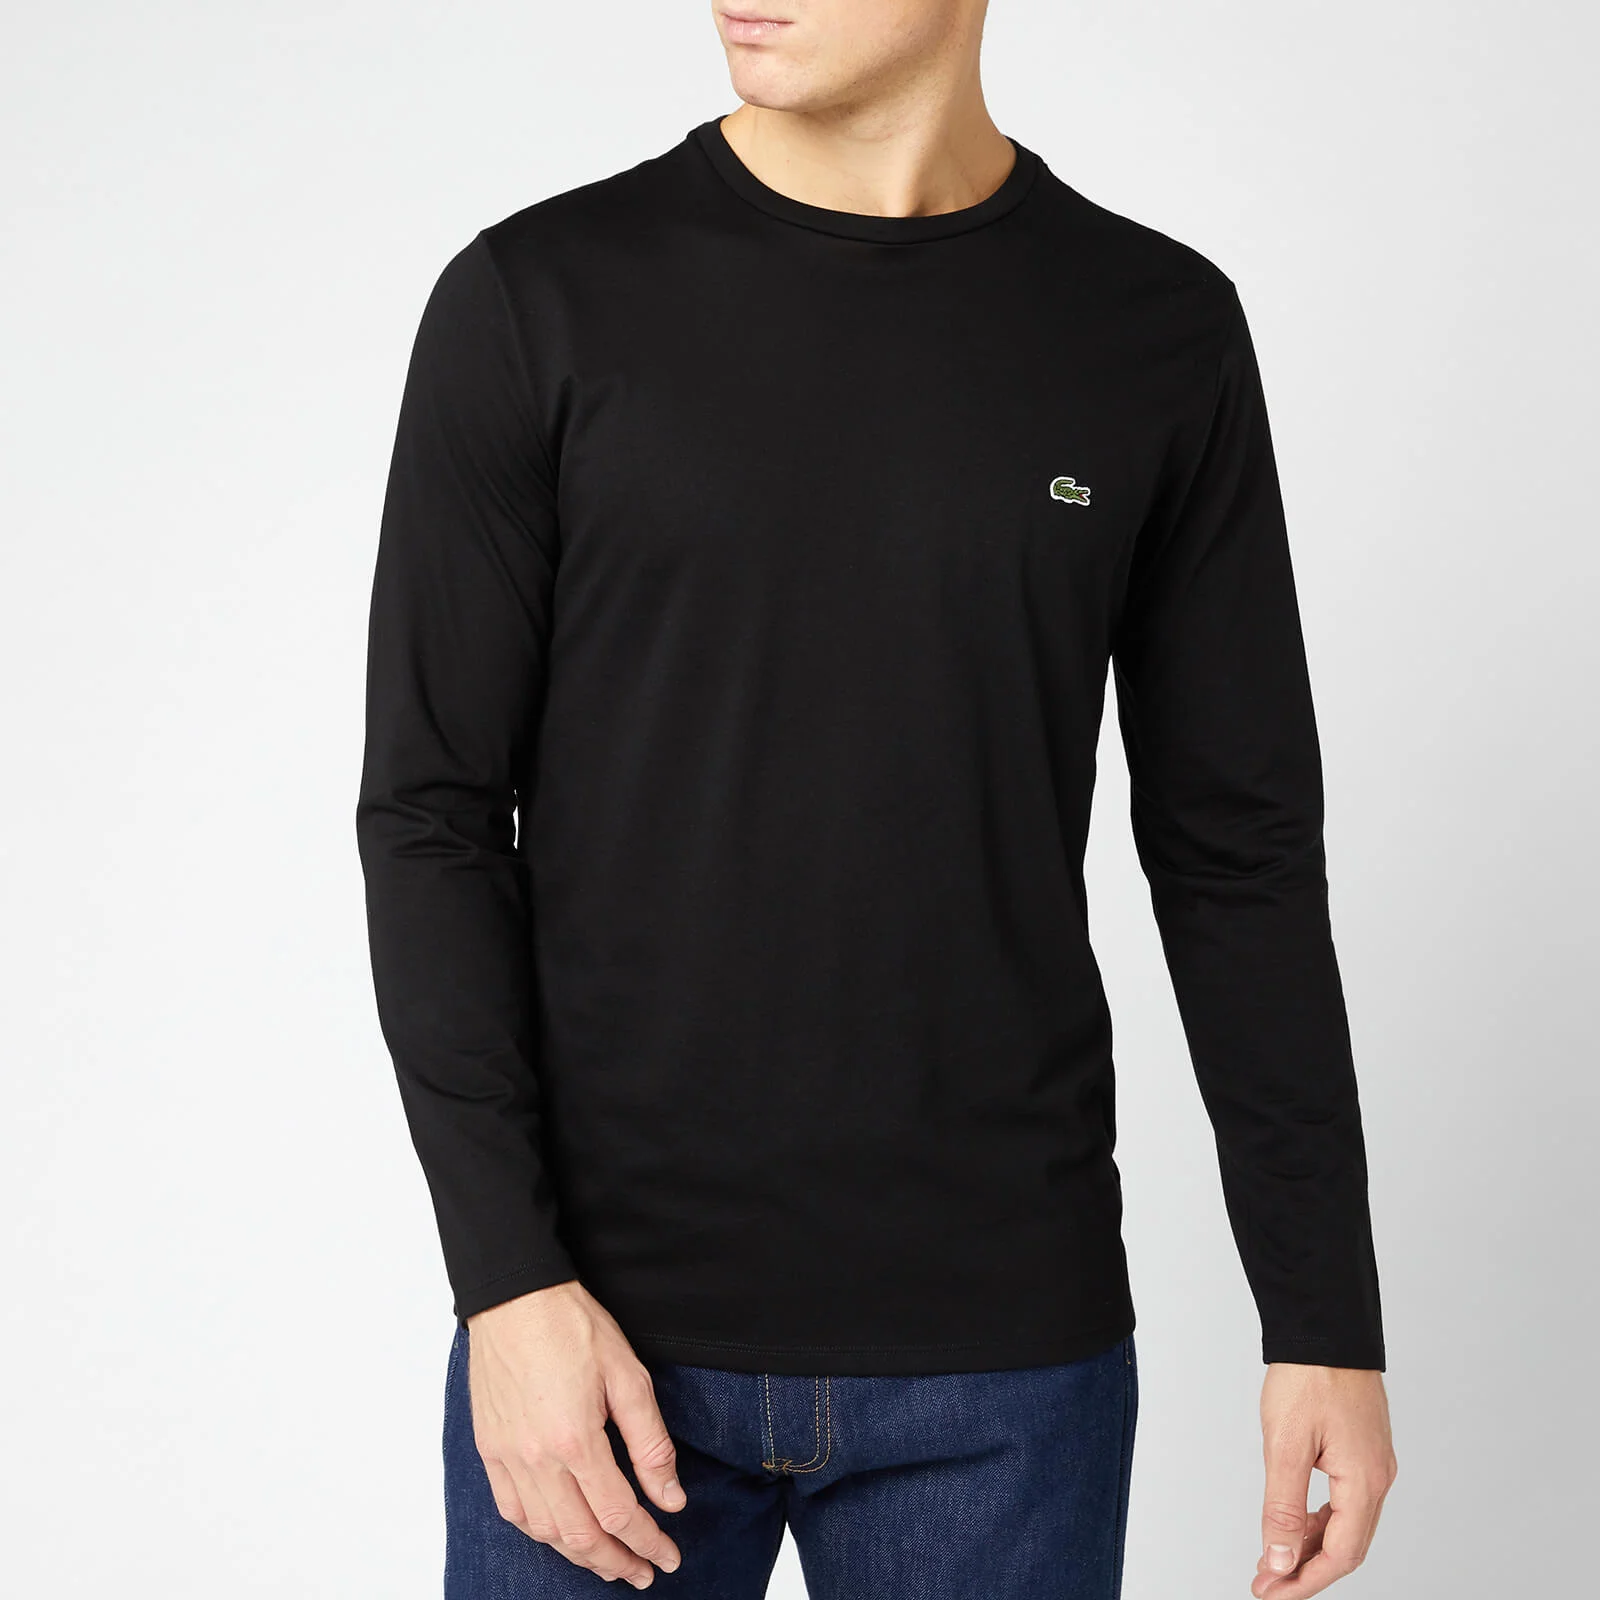 Lacoste Men's Long Sleeve T-Shirt - Black Image 1